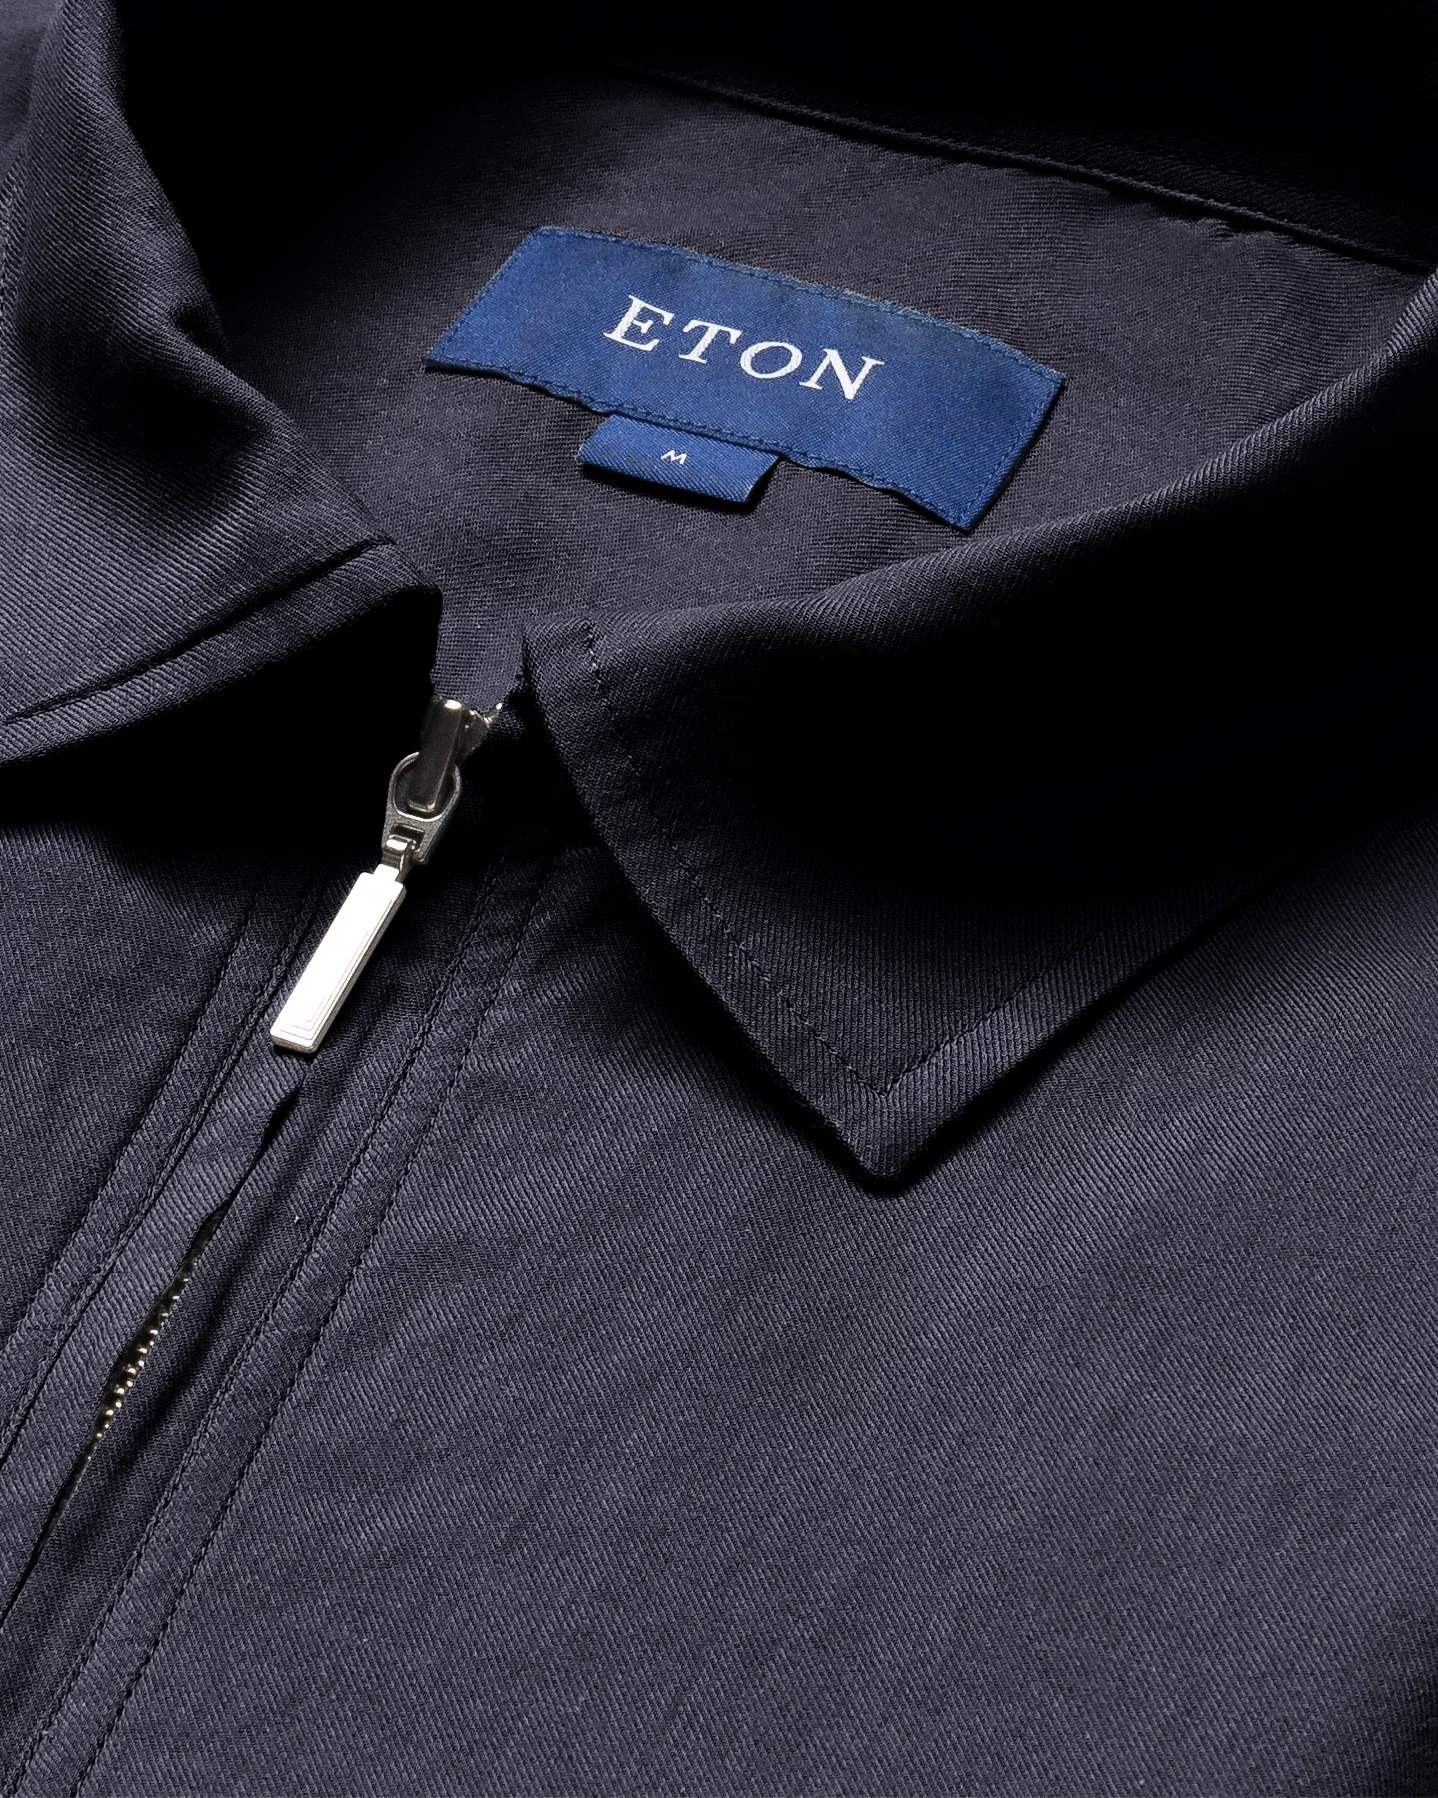 Eton - navy half zip shirt